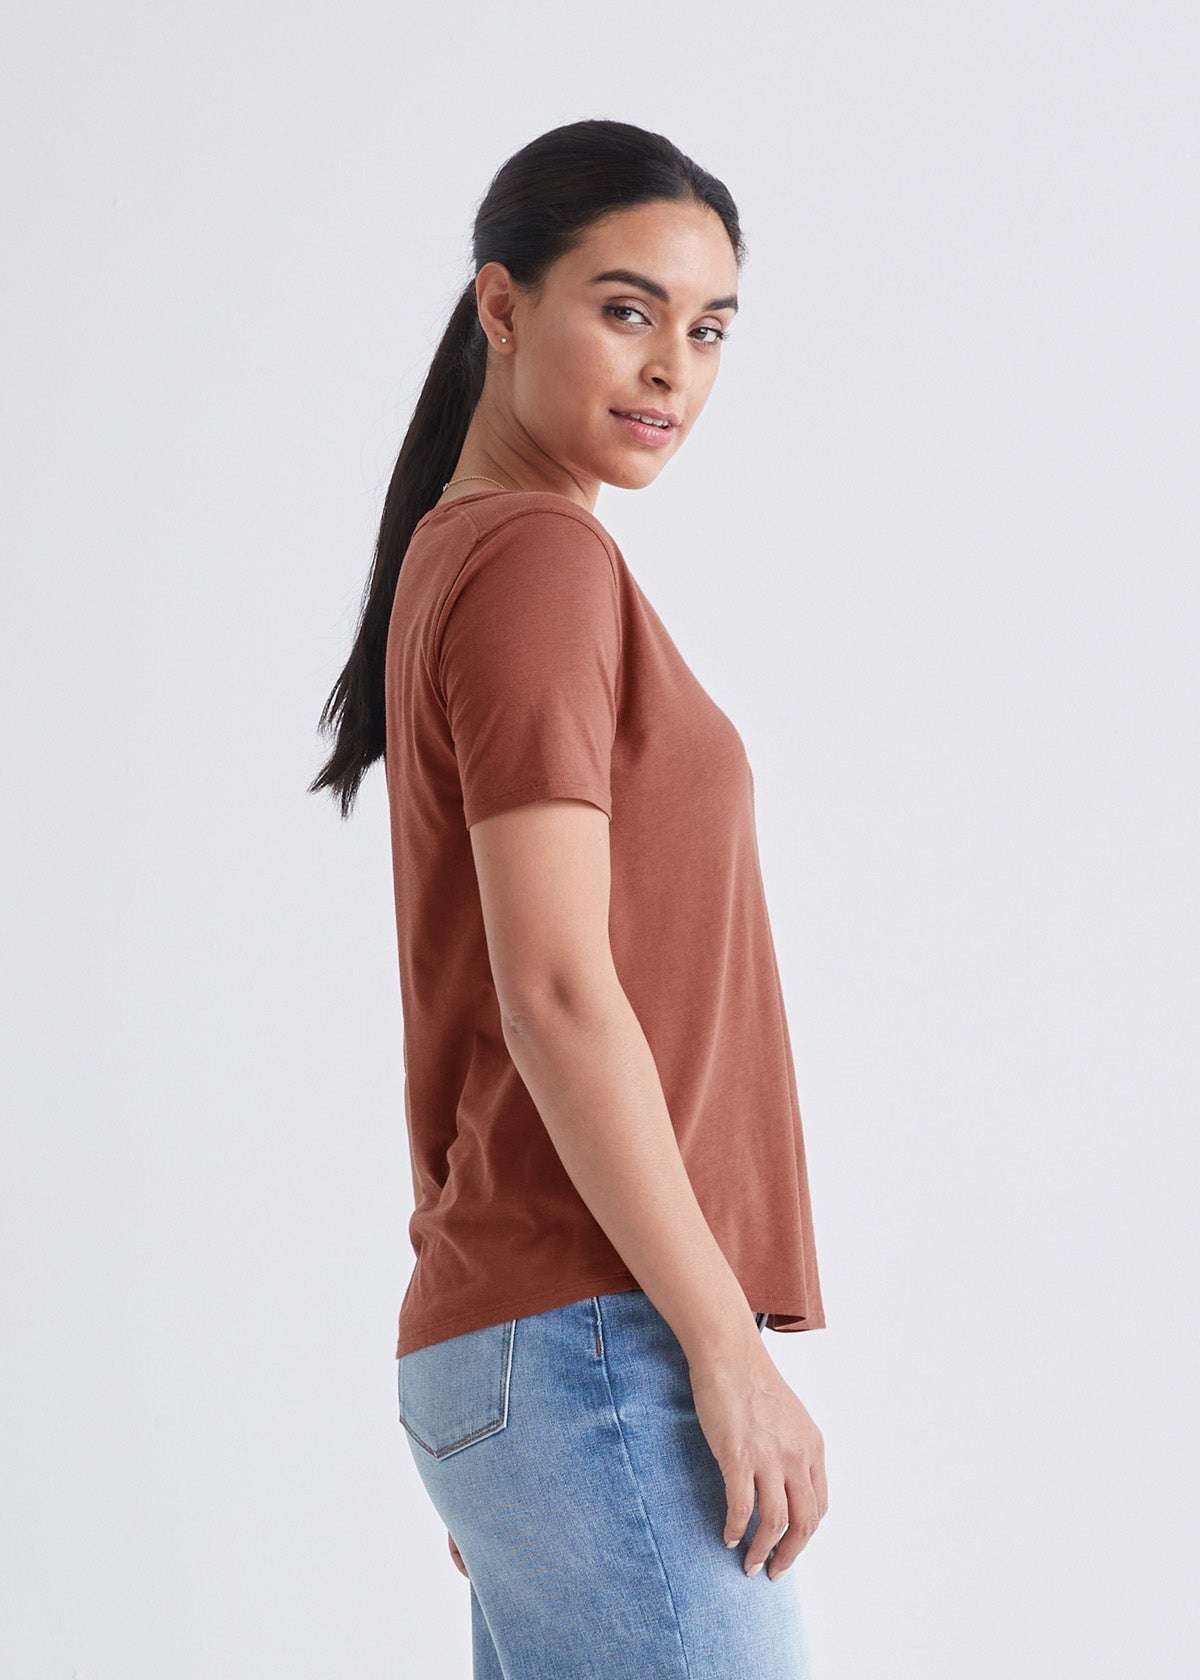 womens soft lightweight reddish-brown v-neck t-shirt side